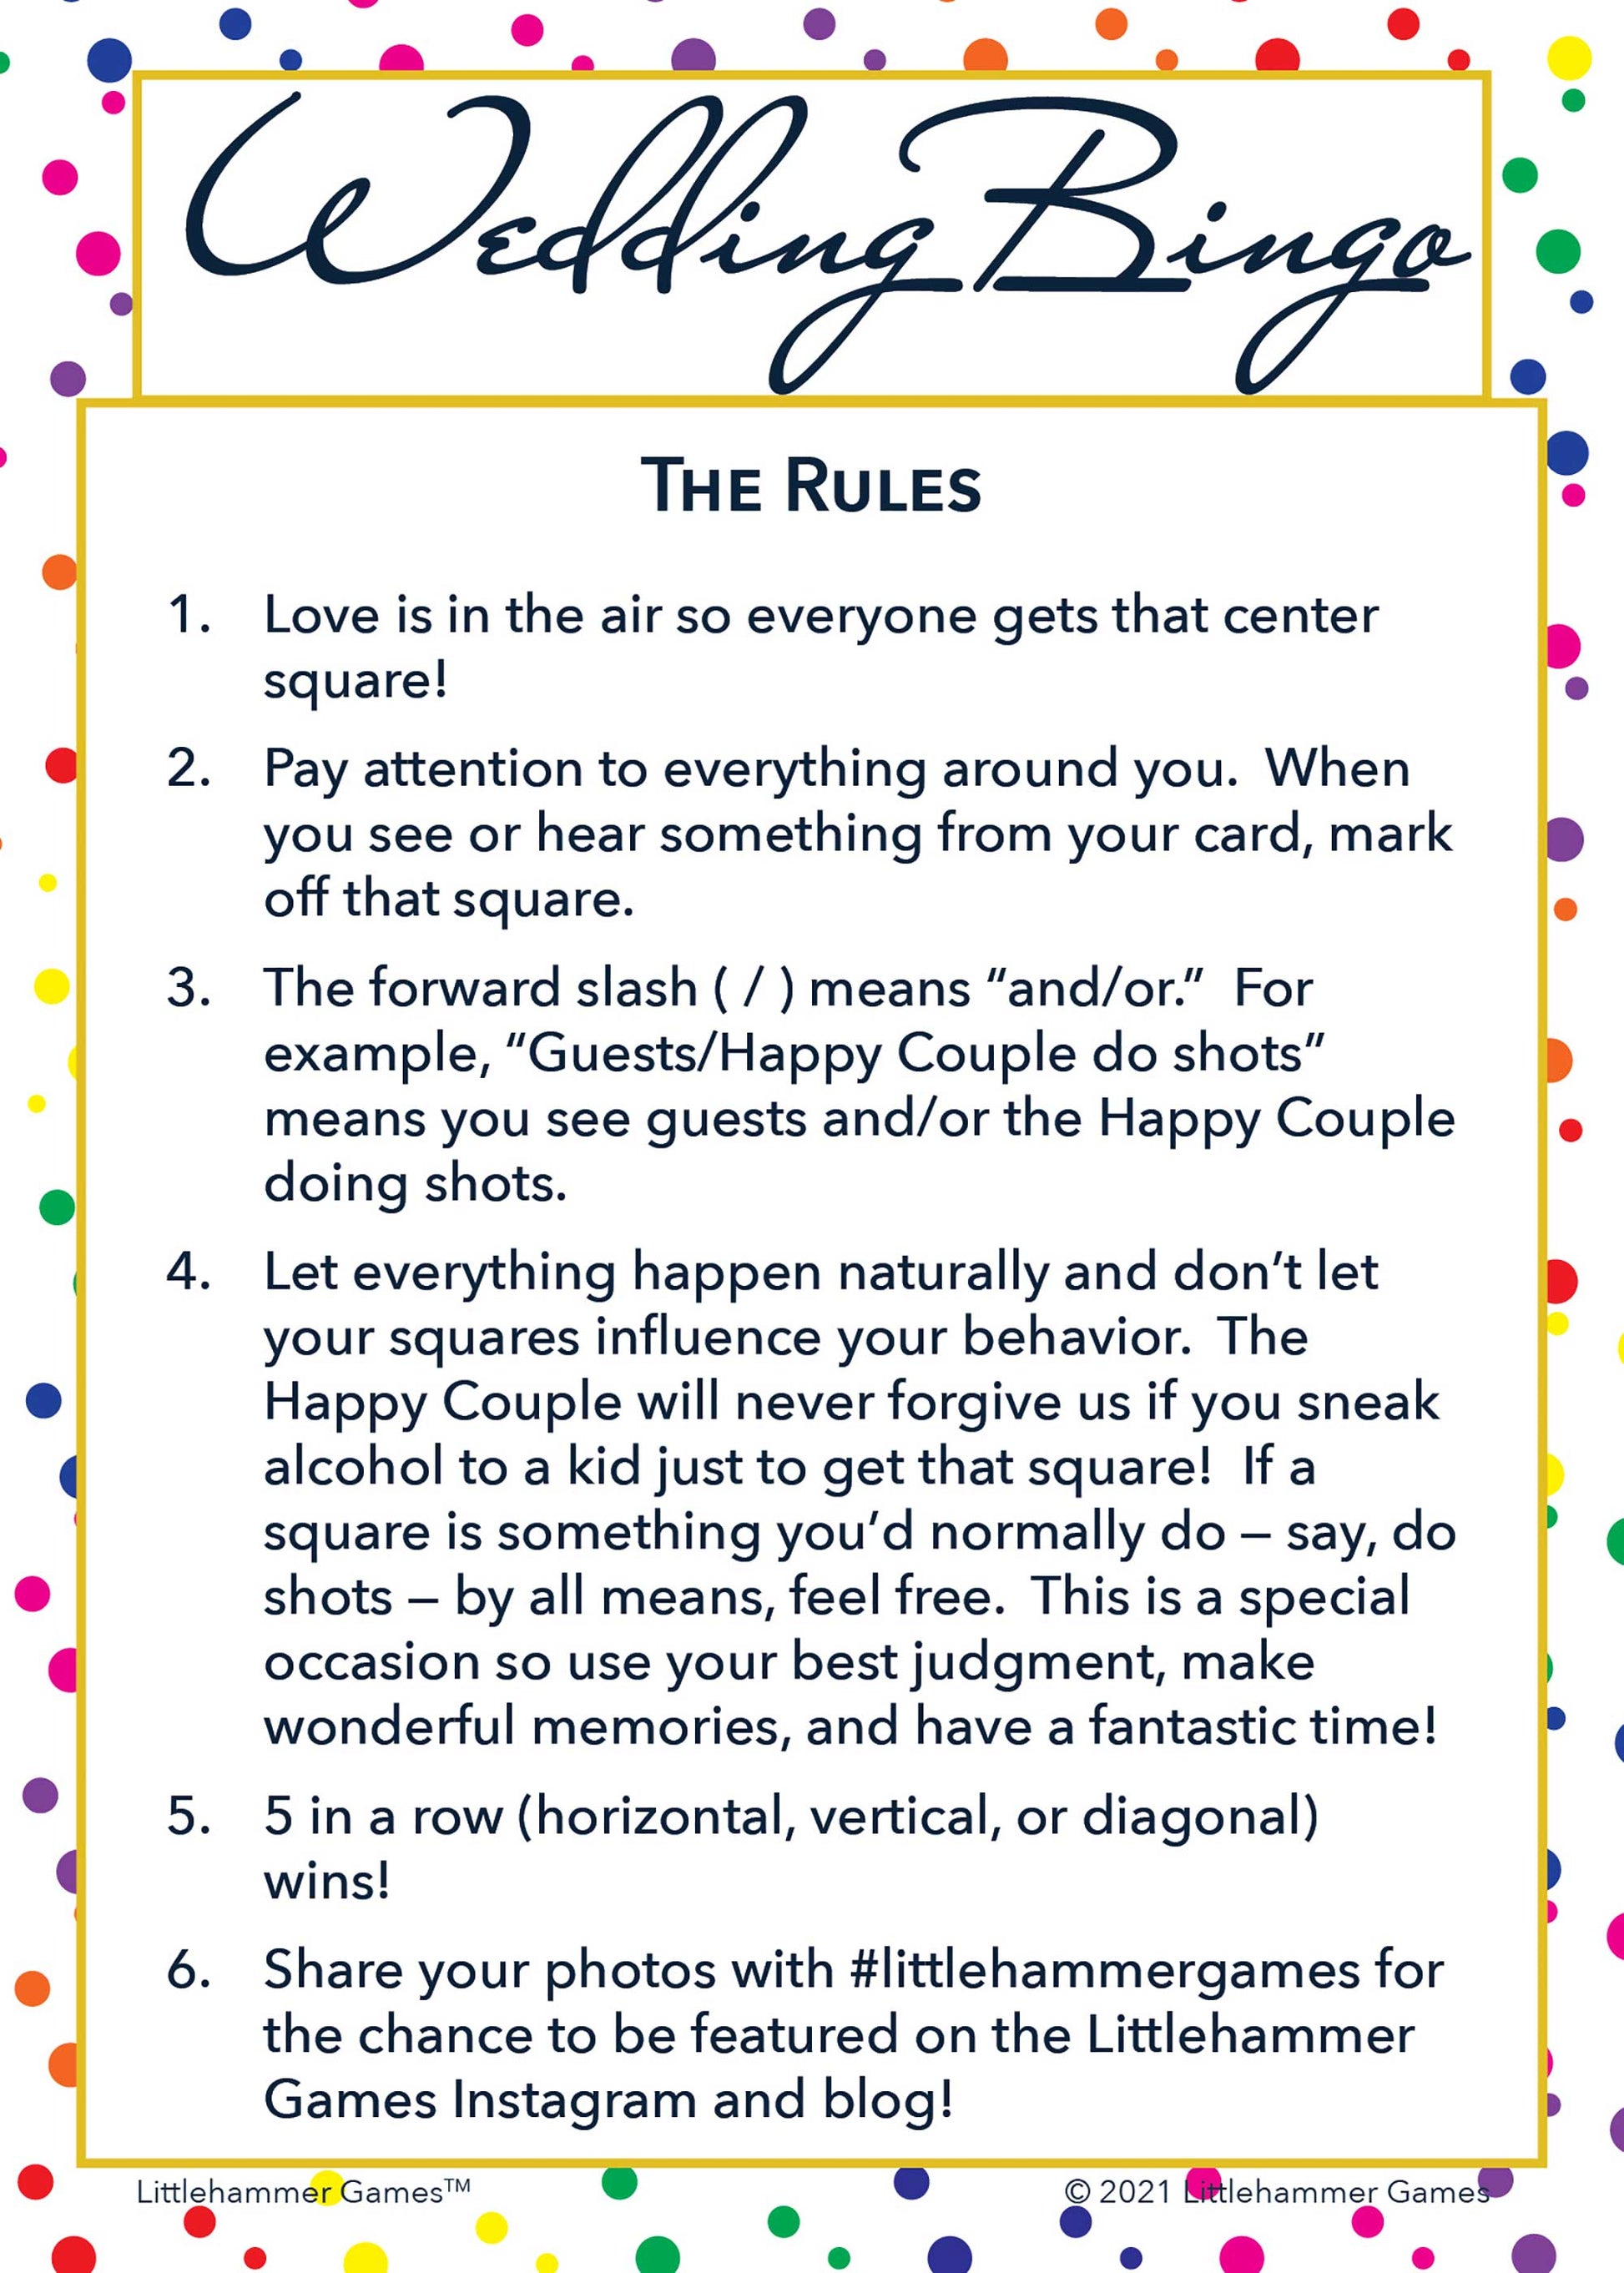 Wedding Bingo rules card on a rainbow polka dot background